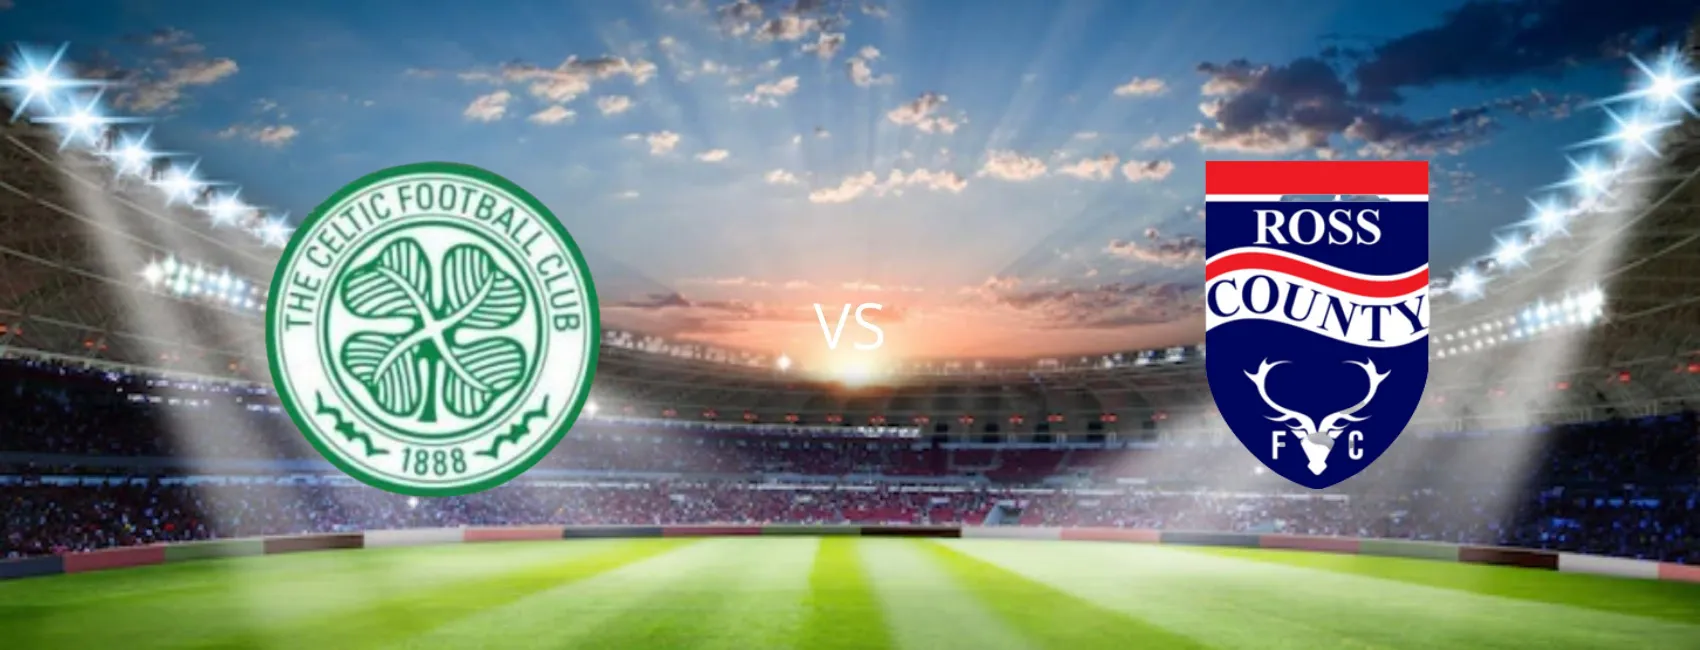 Celtic FC vs Ross County FC Scottish Premiership Tickets on sale now Ticombo